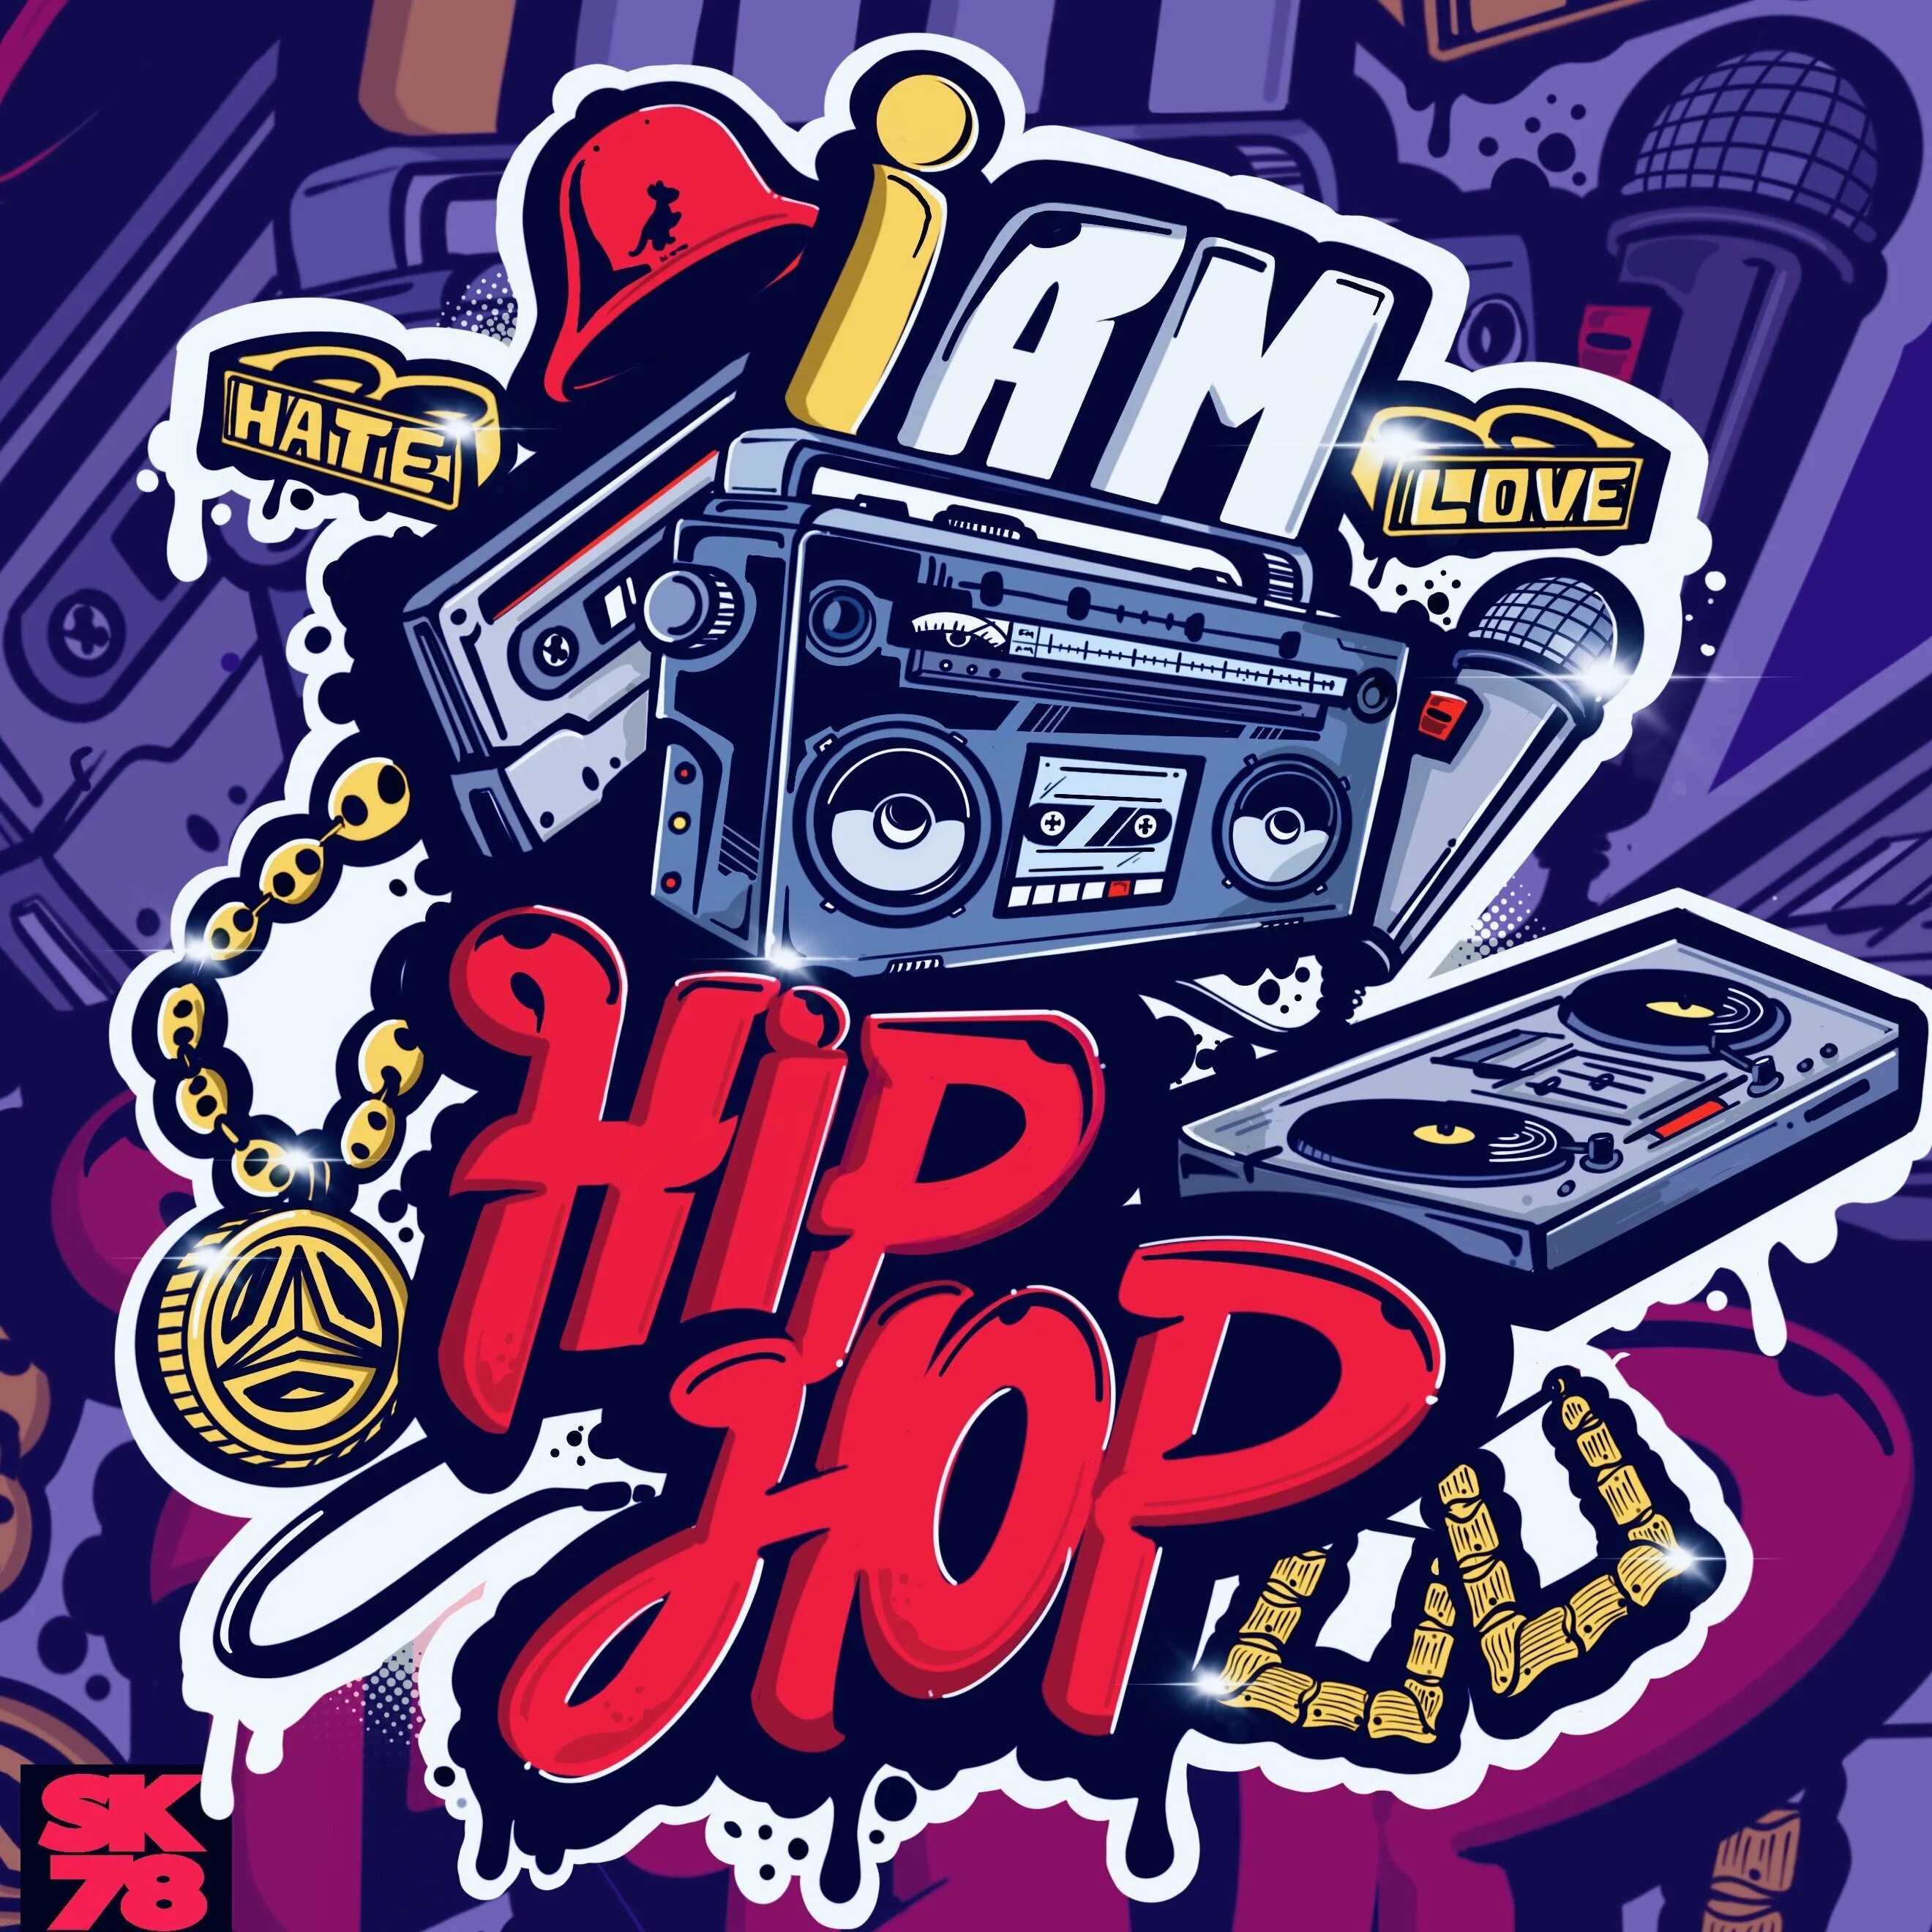 Классическая музыка в стиле рэпа. Хип хоп. Хип хоп арт. Хип хоп иллюстрации. Хип хоп музыкальный стиль.